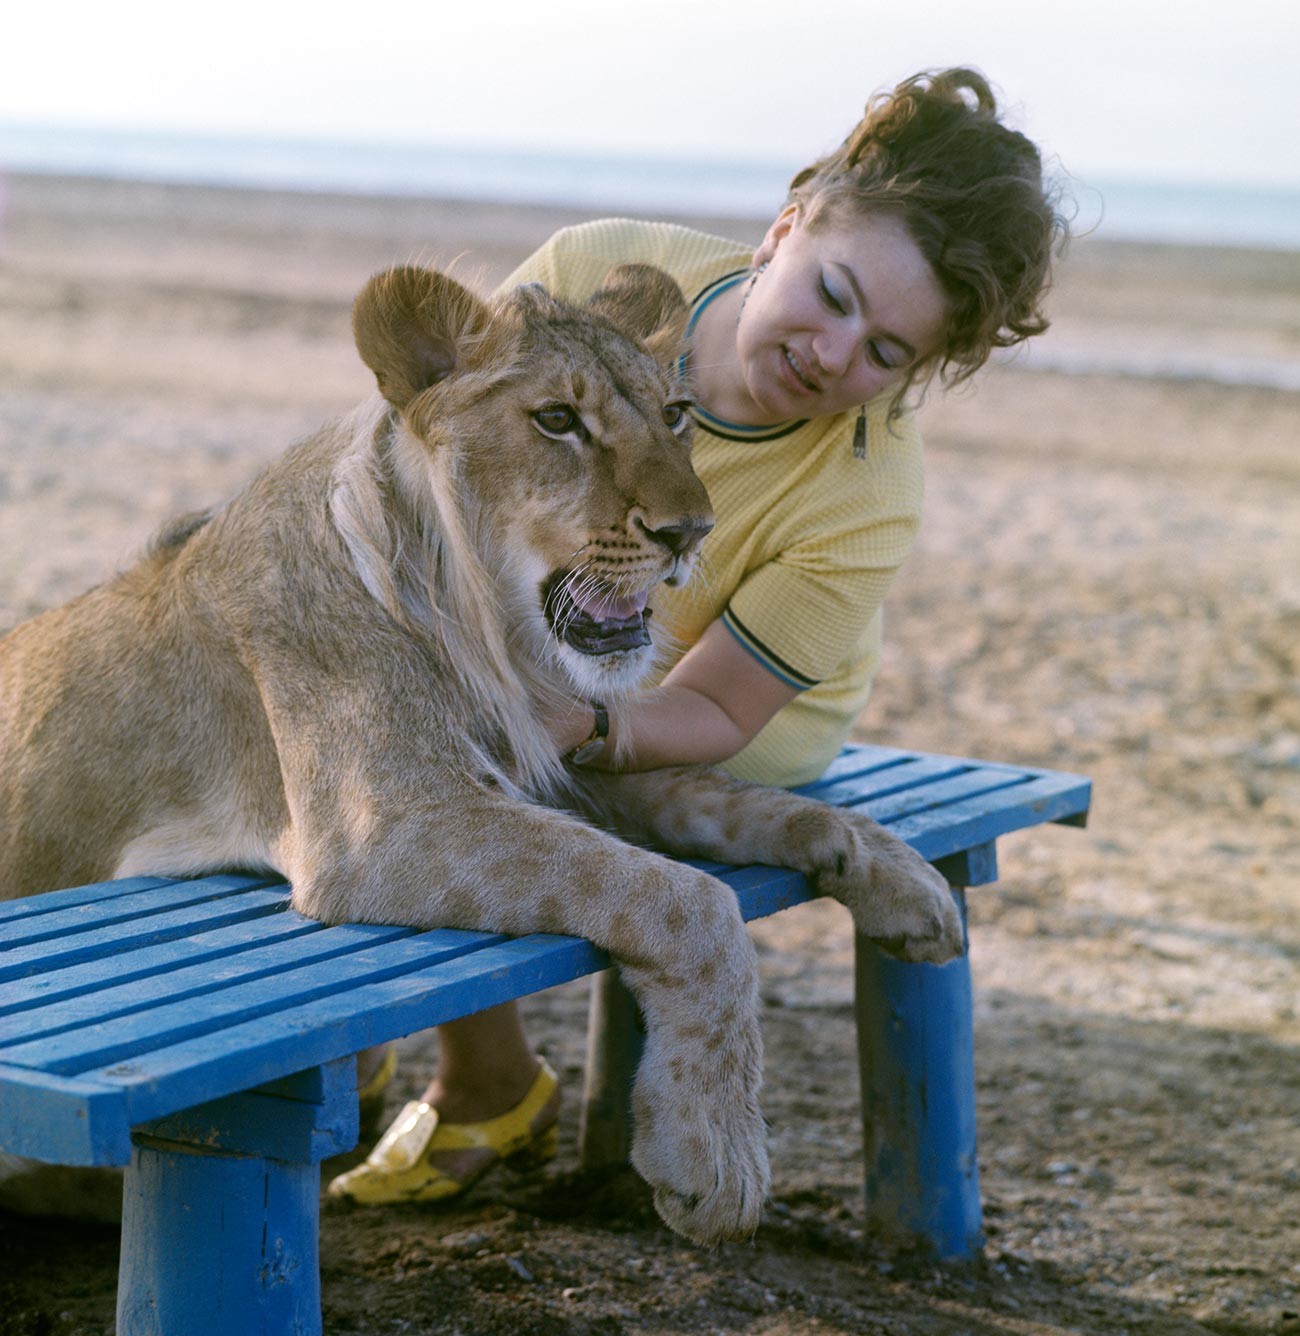 Nina Berberova on a walk with her pet lion King. The coast of the Caspian Sea